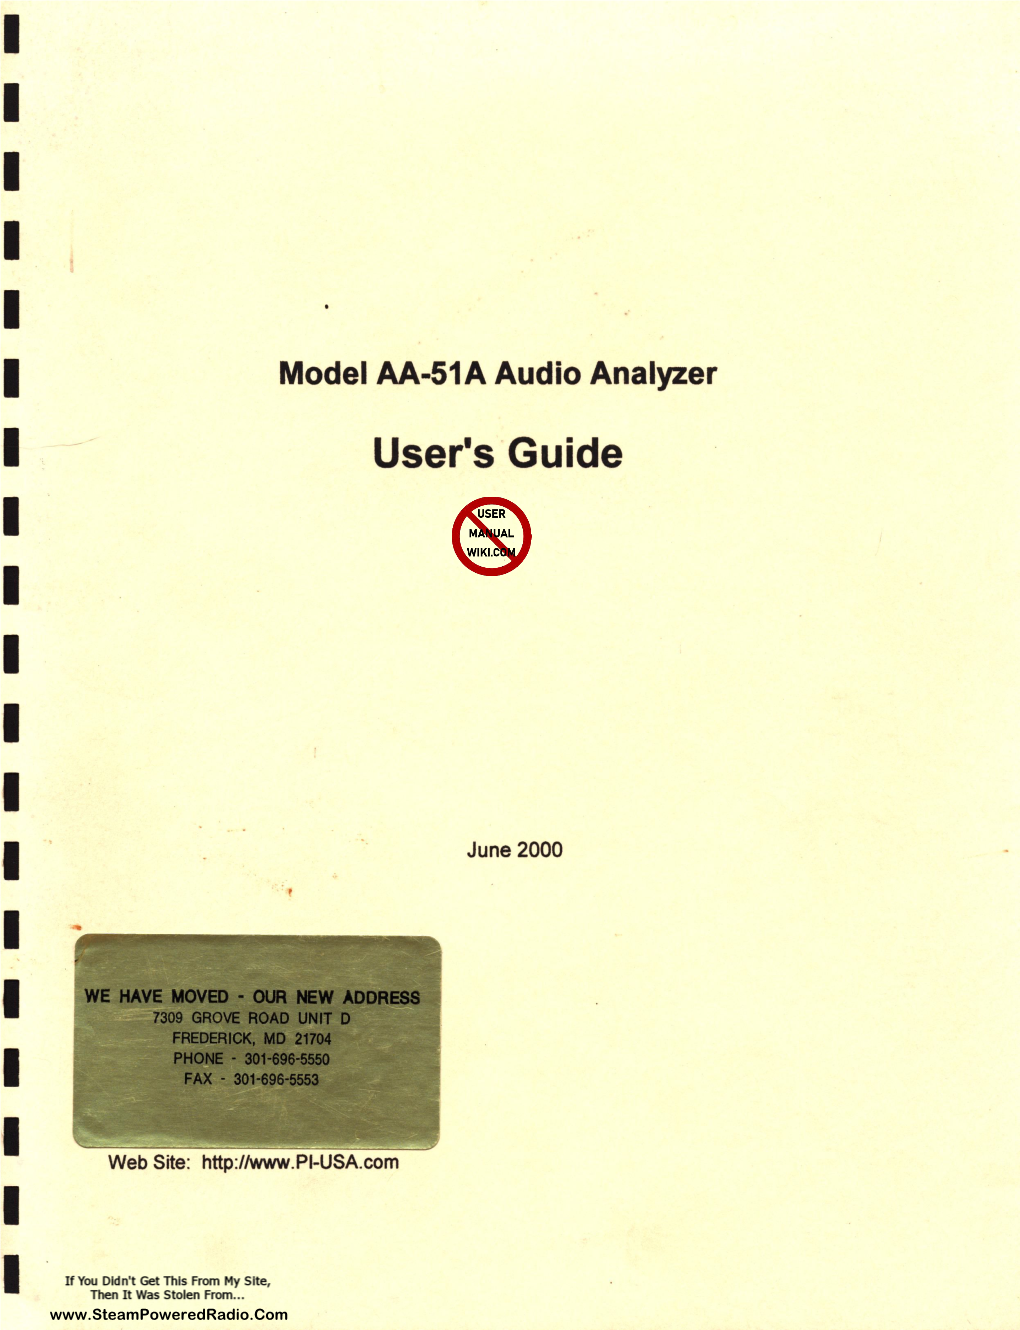 Potomac Instruments Model AA-51 Audio Analyzer Users Guide